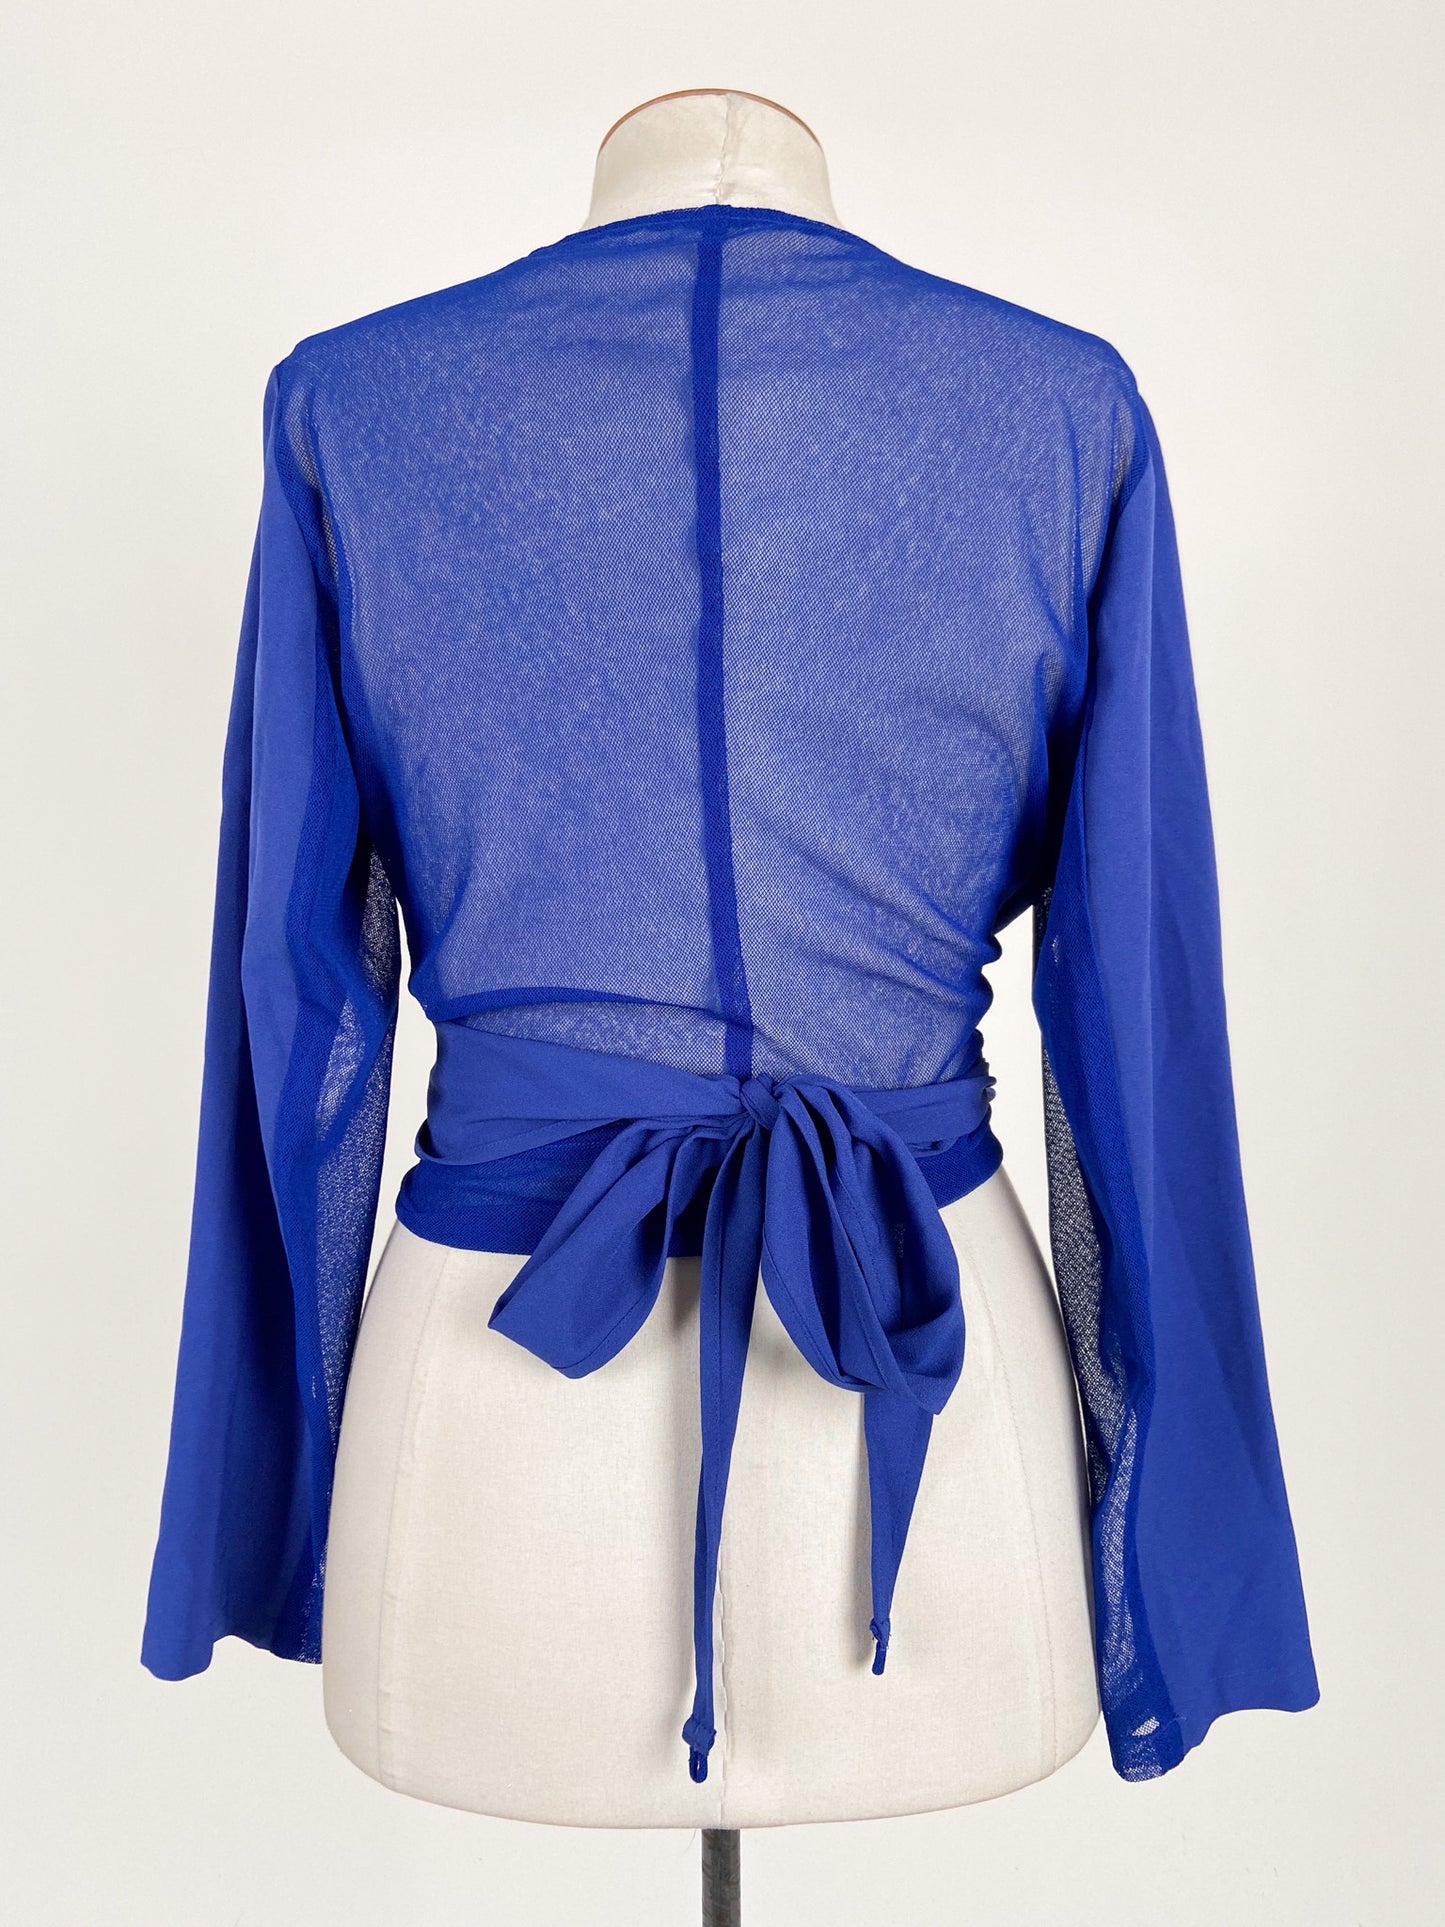 Annah Streton | Blue Workwear Top | Size XL